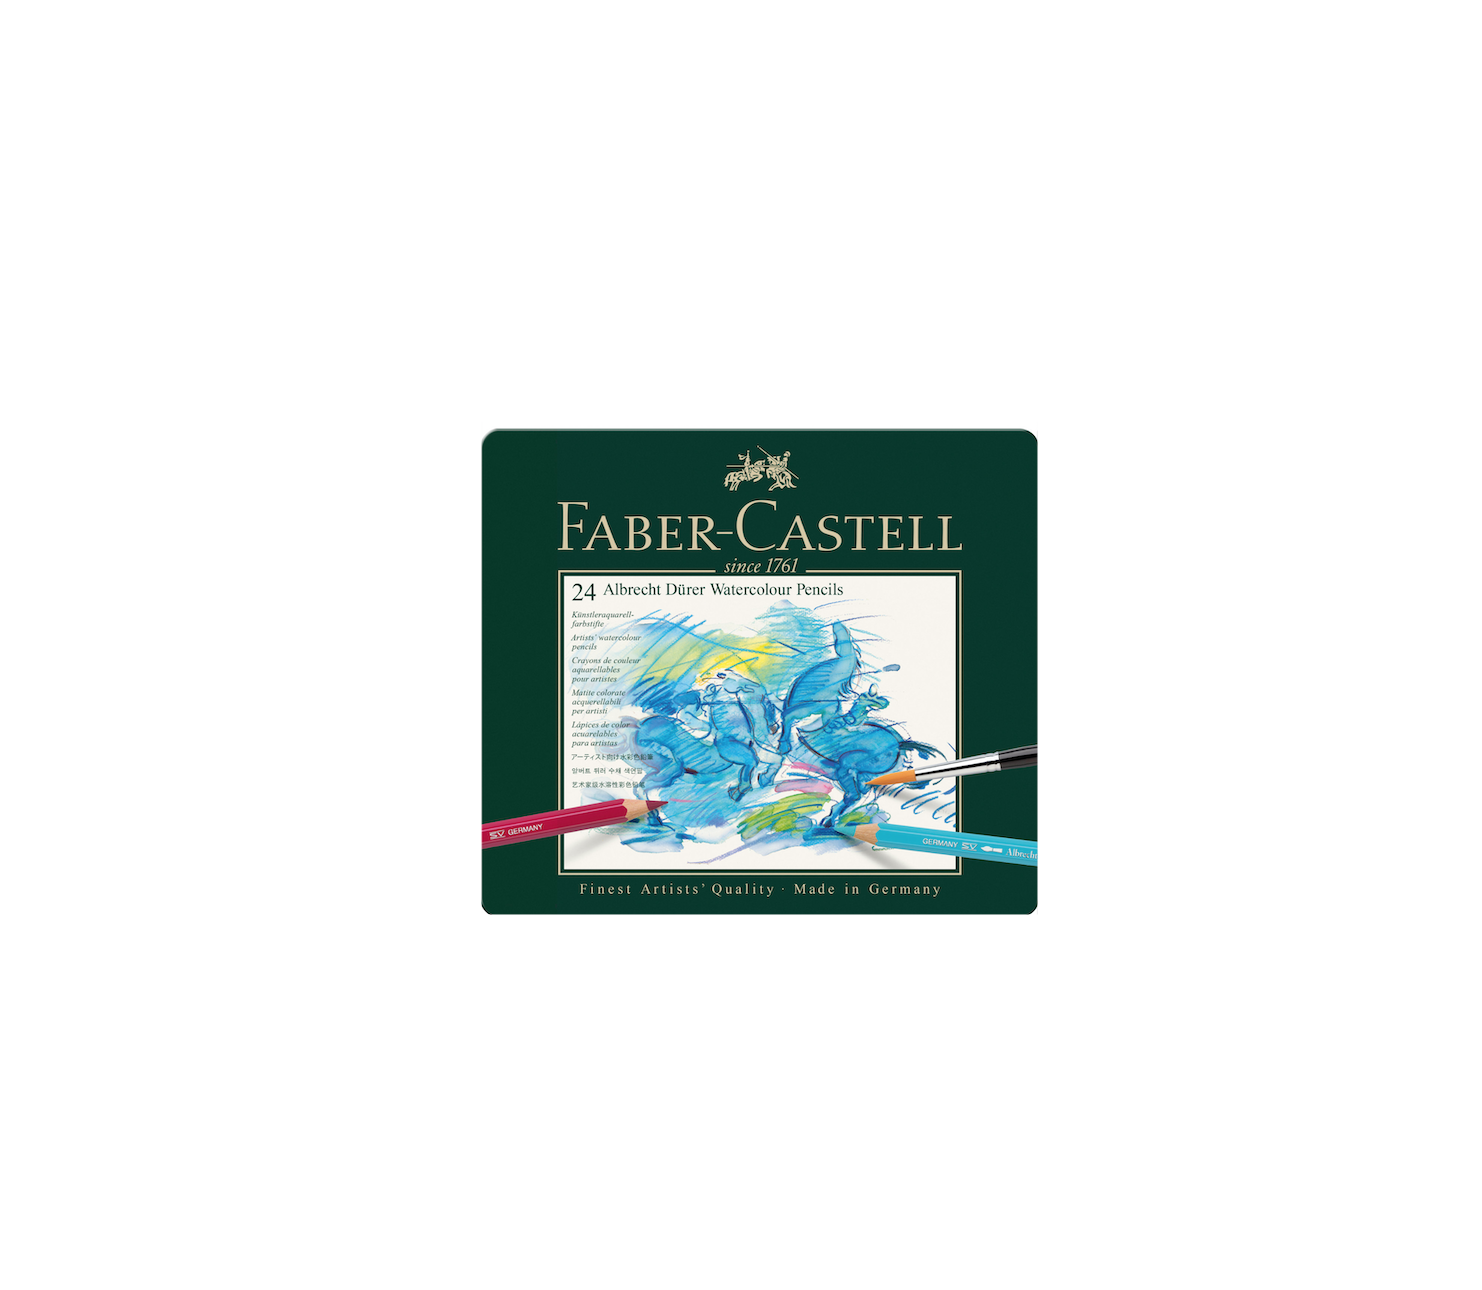 FABER CASTELL X 24 ALBRECHT DURER COLOUR PENCILS CRAYON COULEUR ART ARTISTE DESSIN PRO COMASOUND KARTEL 4005401175247 CSK ONLINE